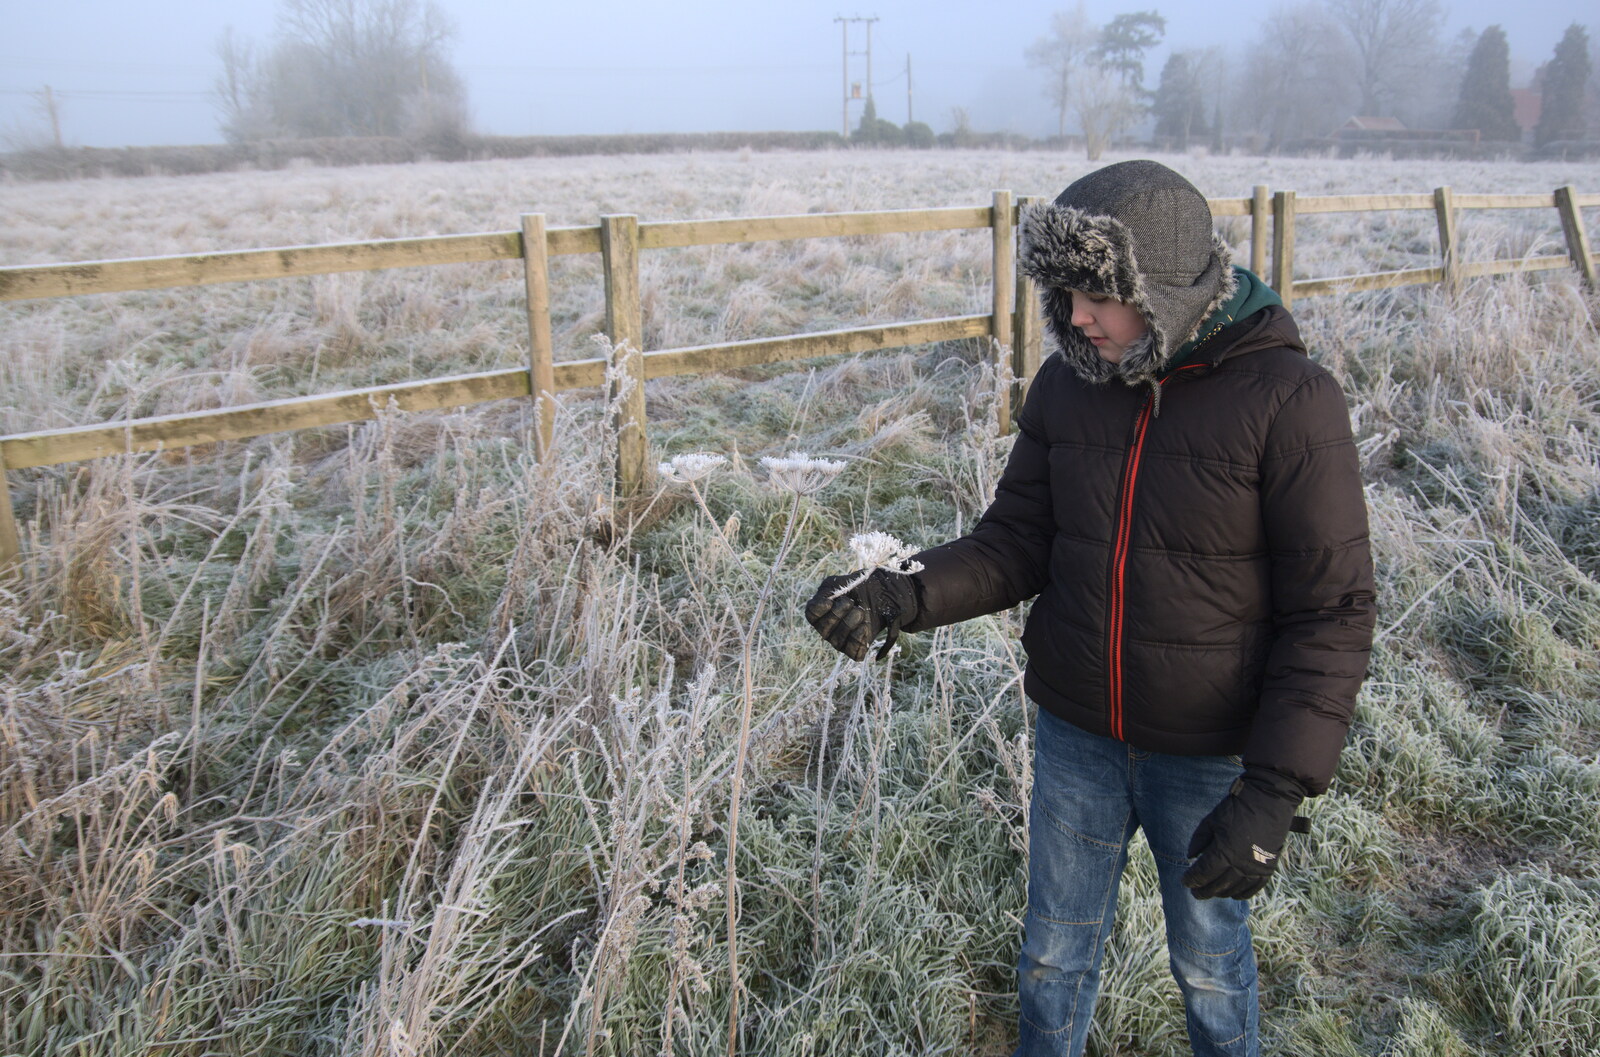 A Frosty Walk Around Brome, Suffolk - 22nd January 2023: Fred pokes a frosty plant